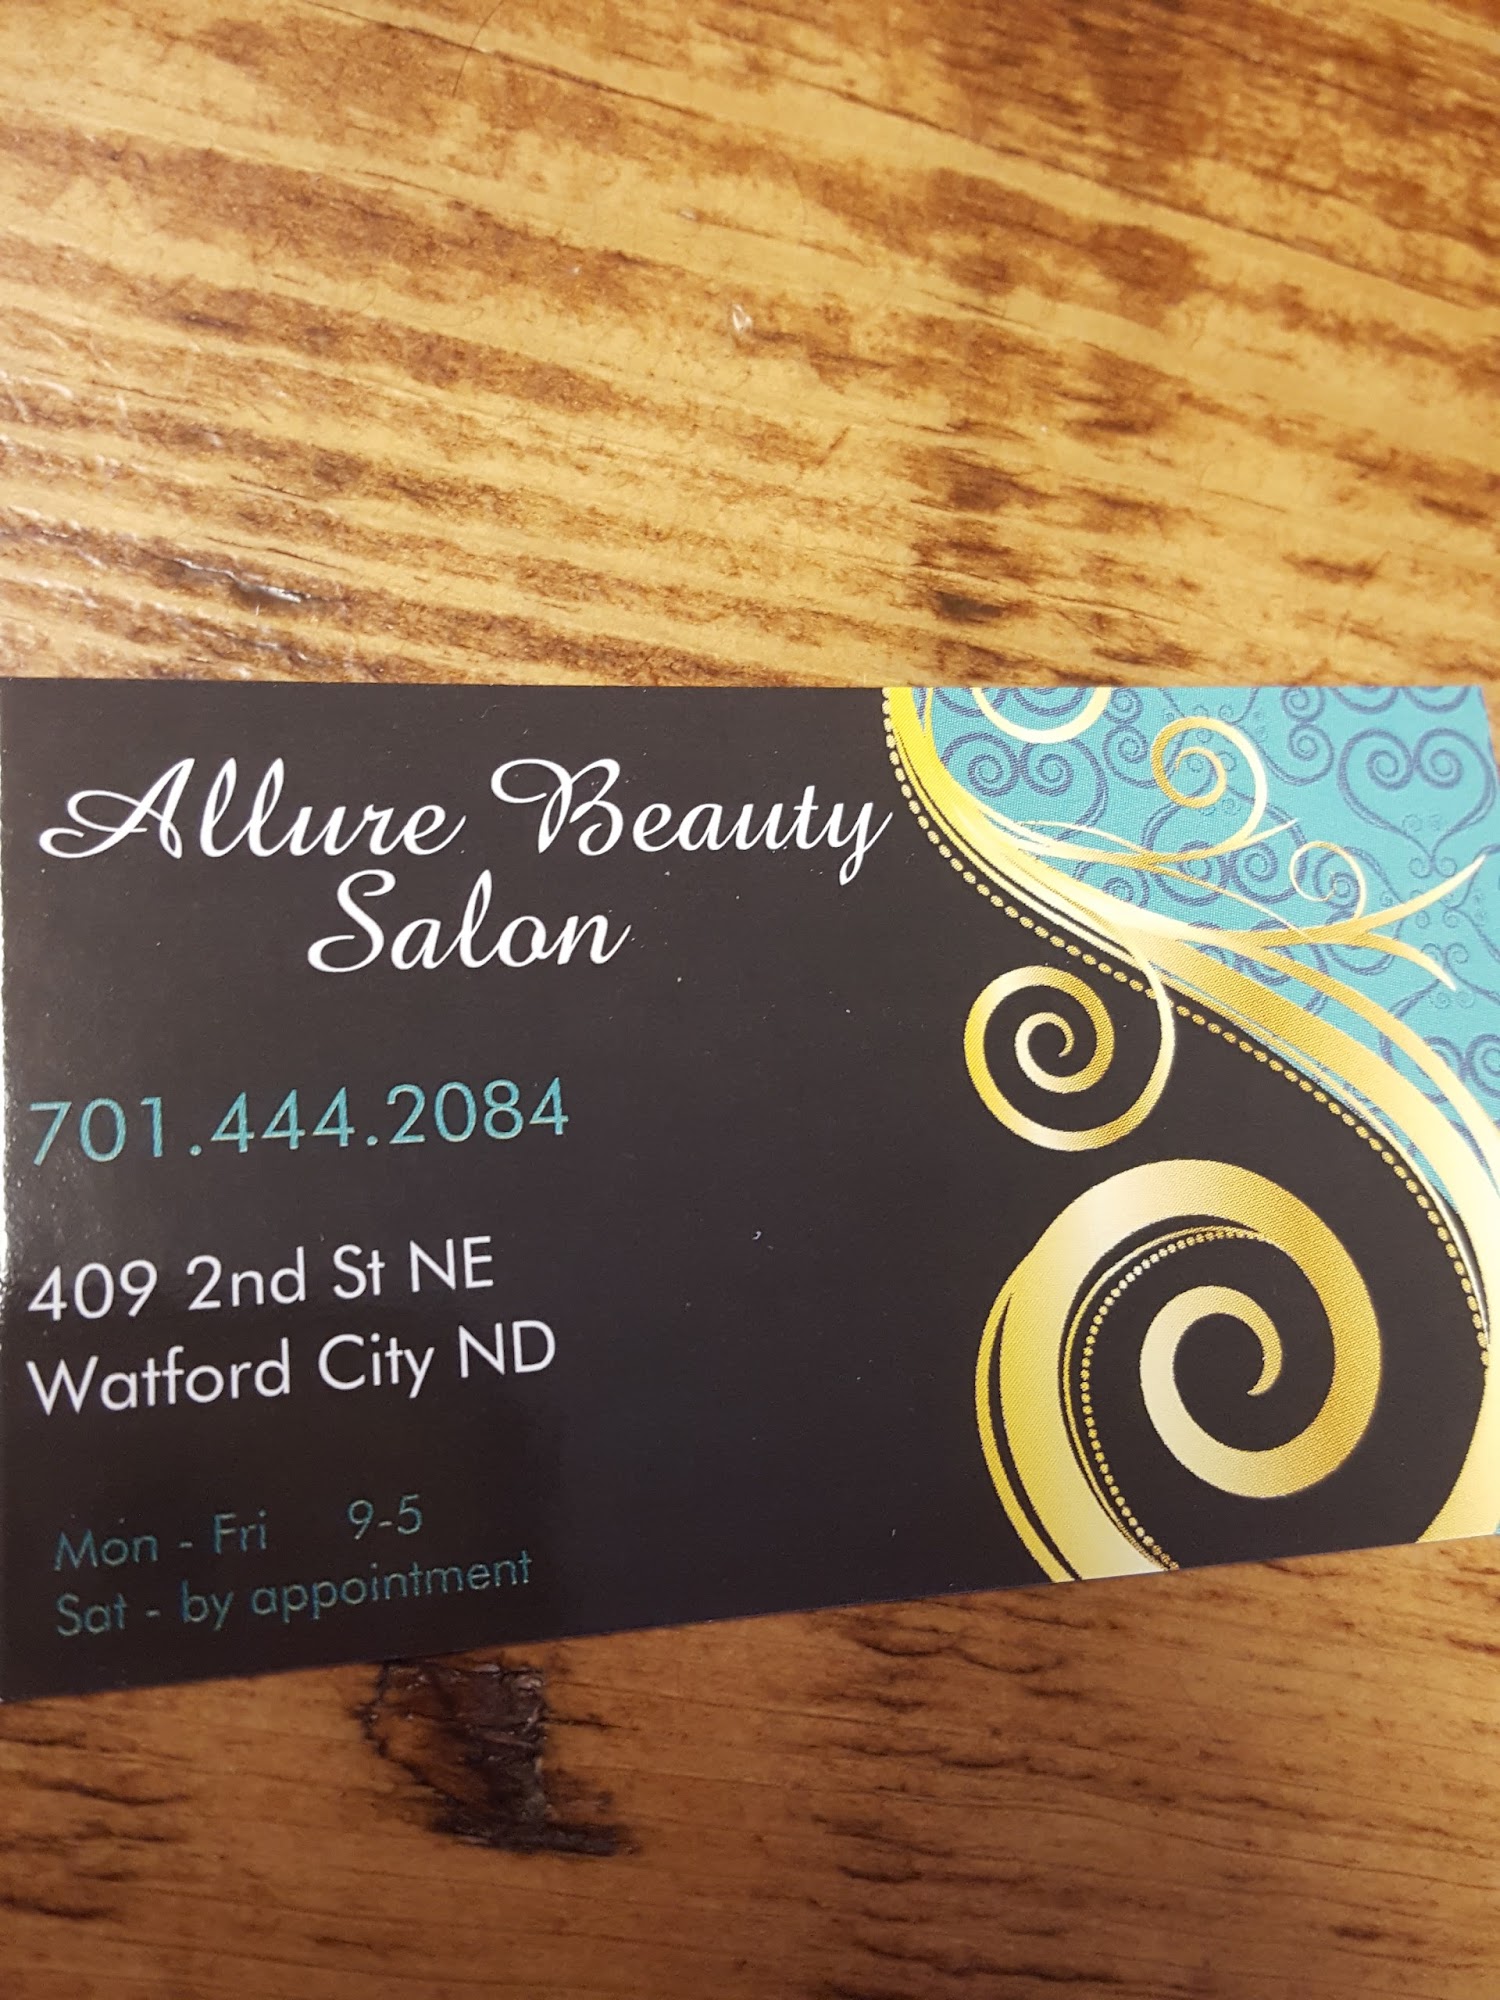 Allure Beauty Salon 409 2nd St NE, Watford City North Dakota 58854